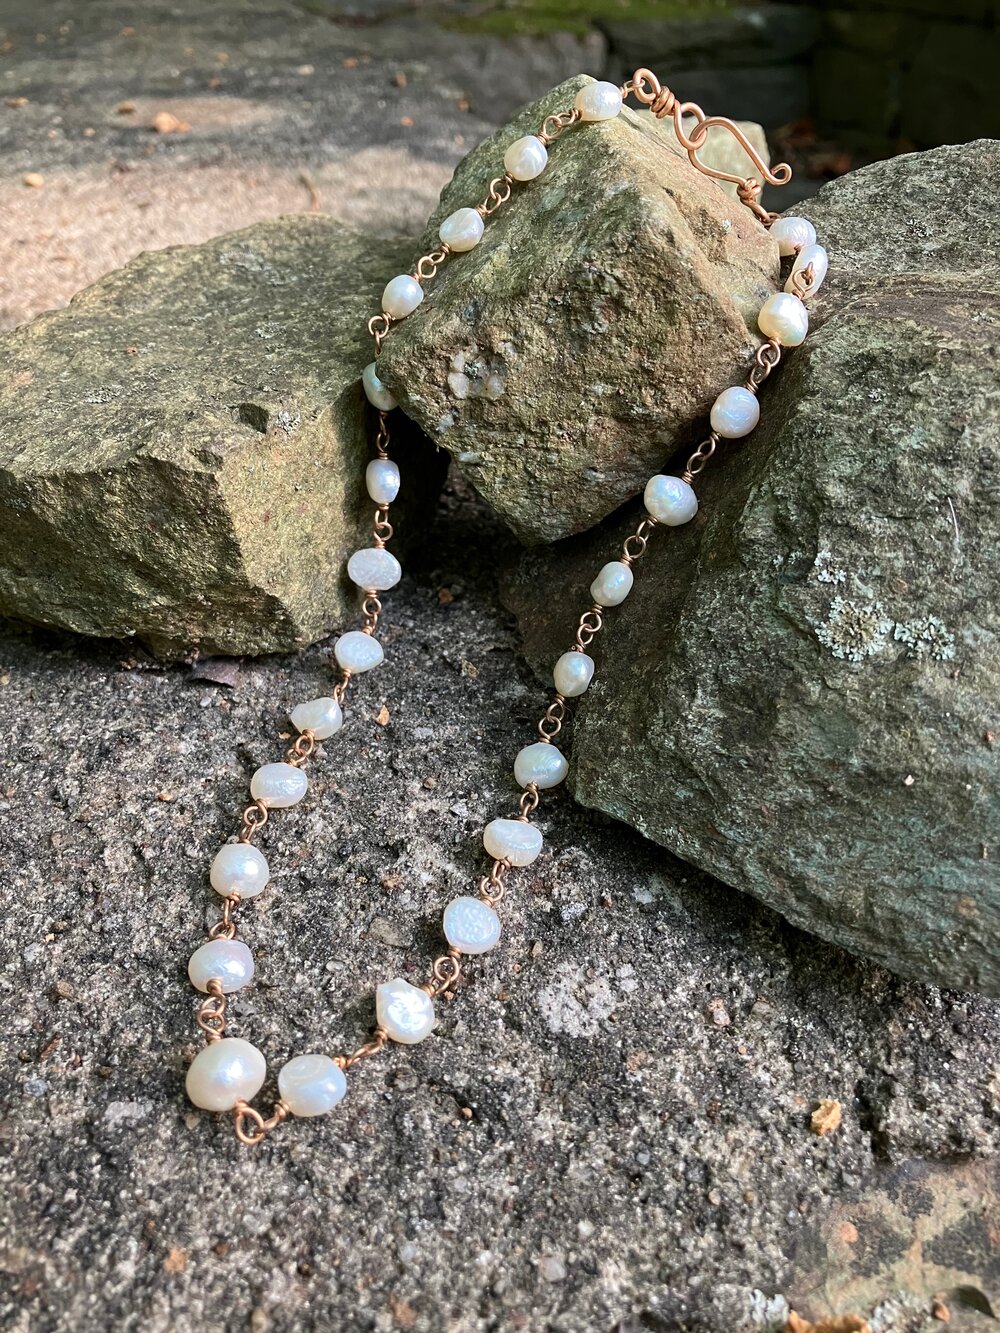 kosiner small pearl pendant retro irregular beads chain necklace women fine  jewelry